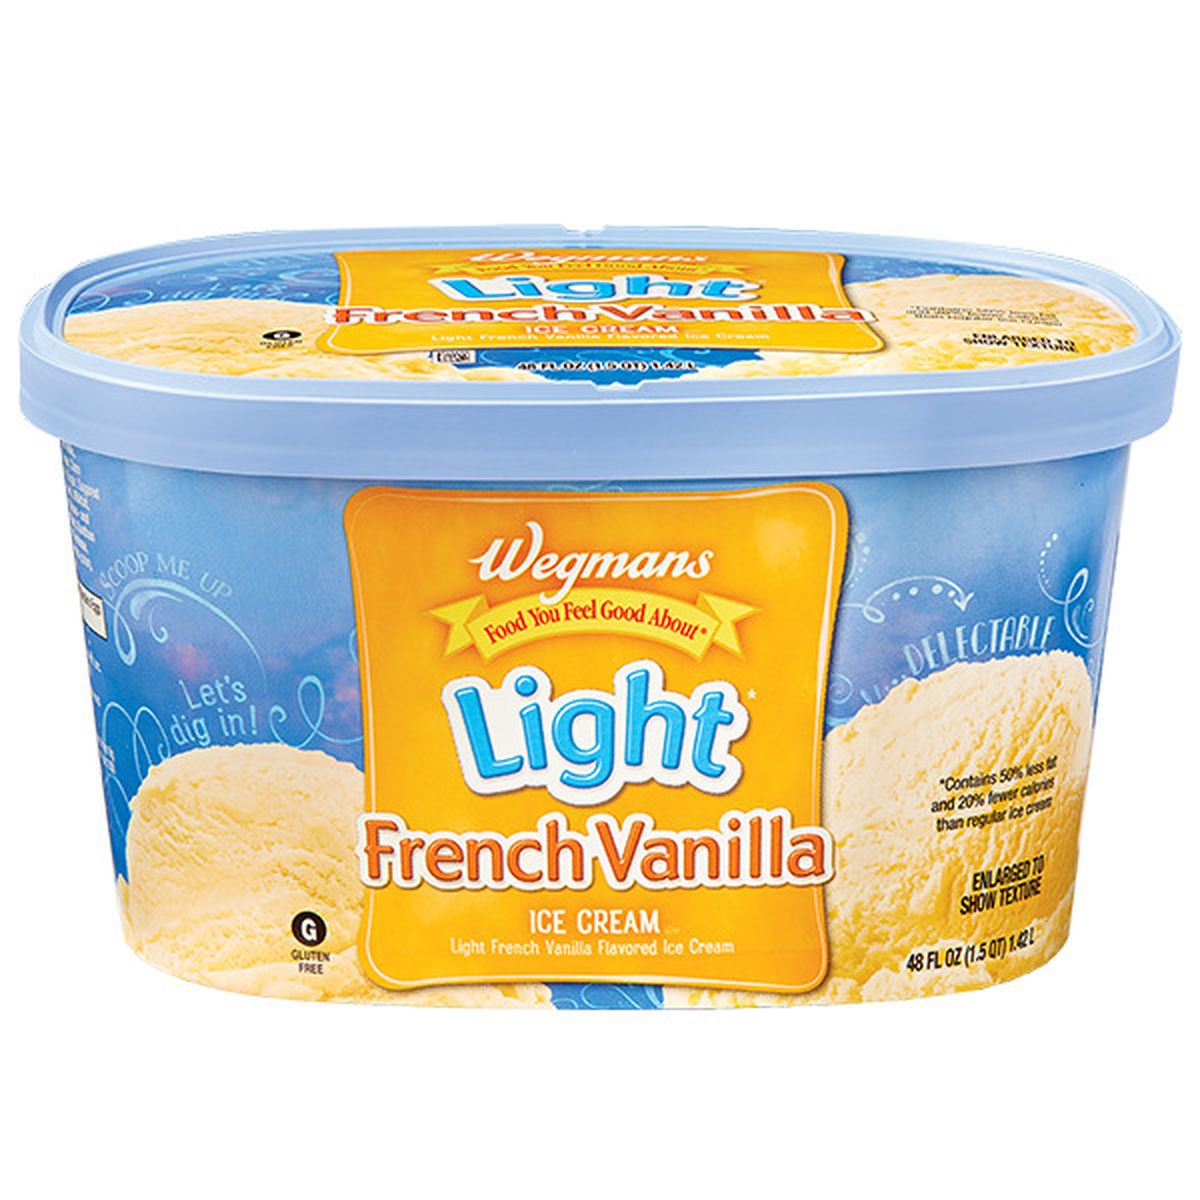 Calories in Wegmans Light* French Vanilla Ice Cream